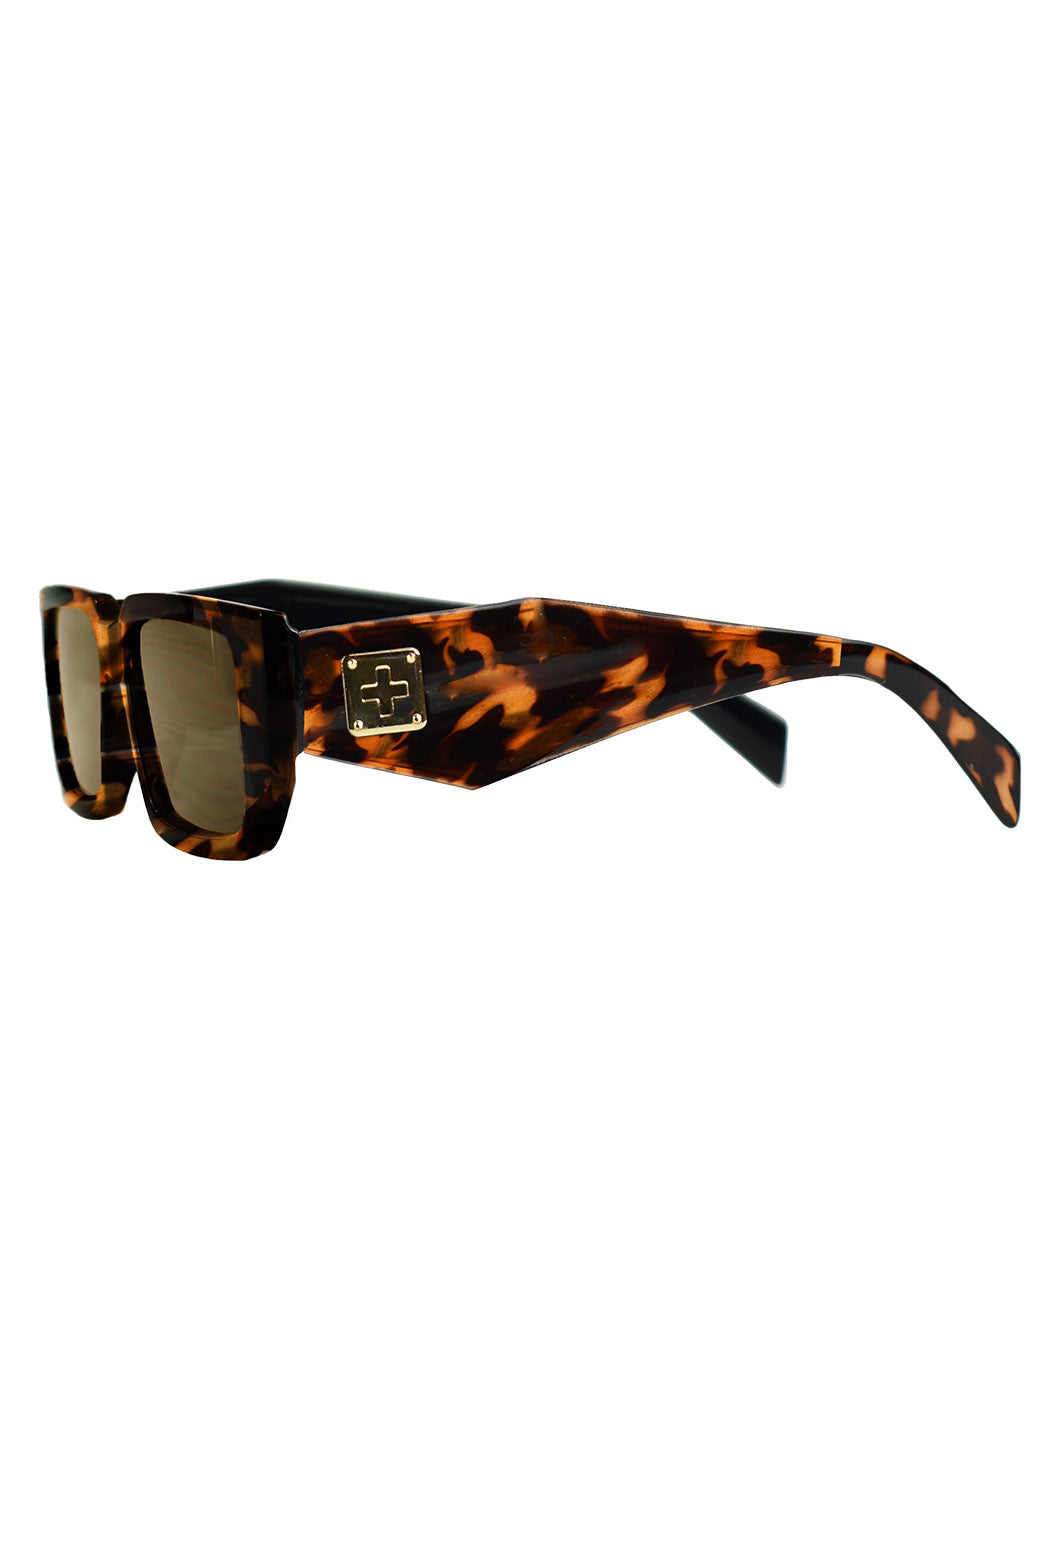 FINAL SALE Peta + Jain Evans Tortoiseshell Sunglasses